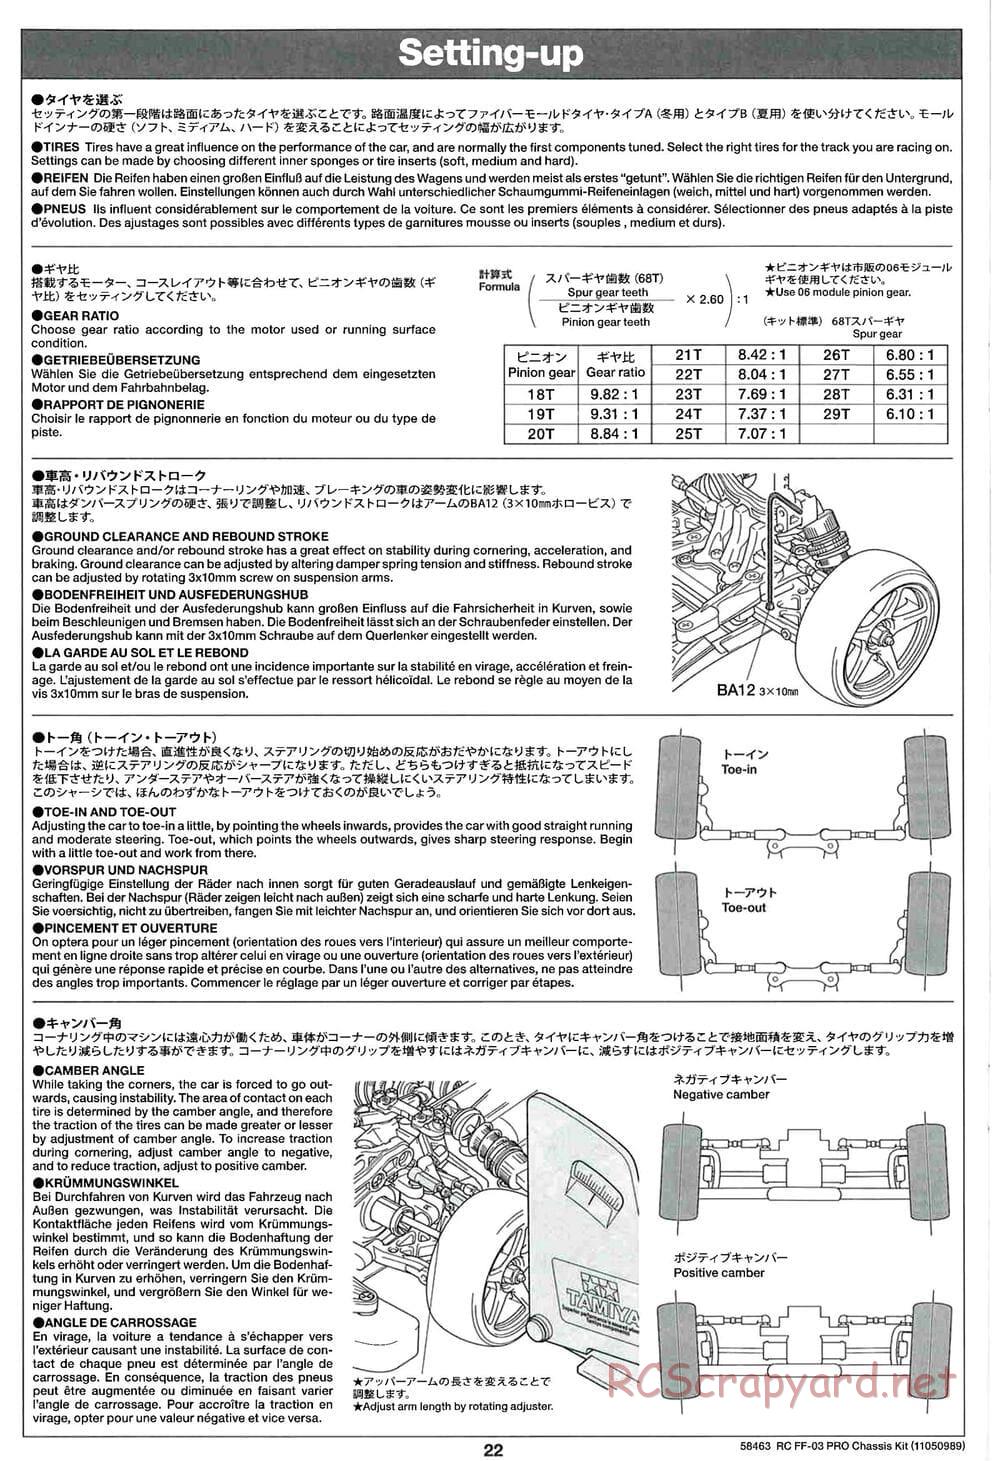 Tamiya - FF-03 Pro Chassis - Manual - Page 22